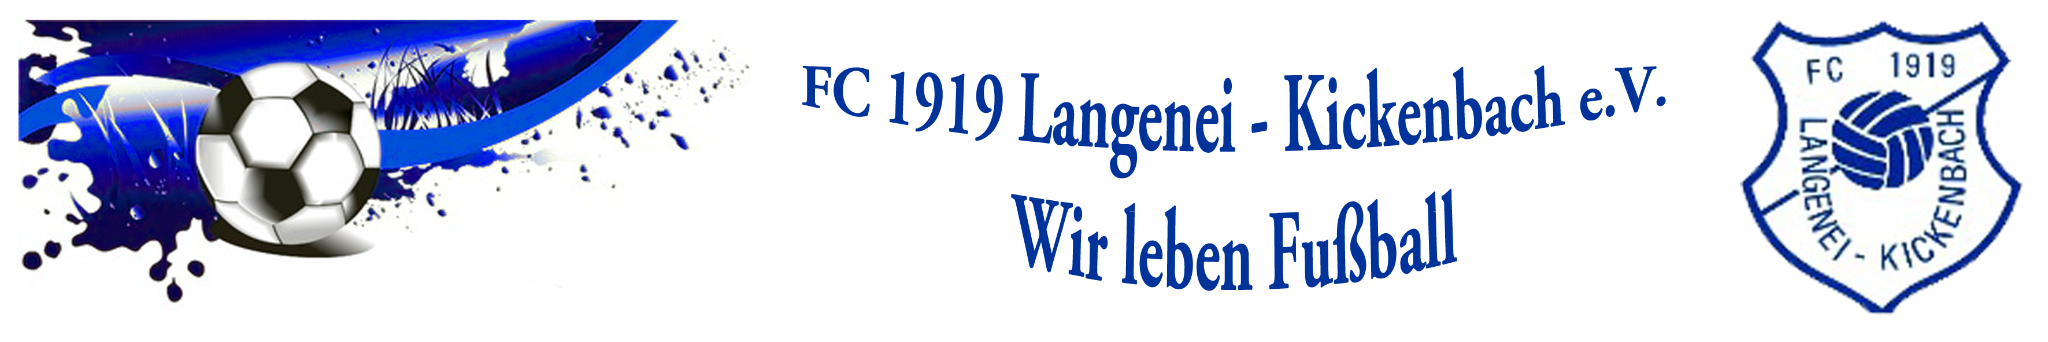 Liga-Tipp des FC Langenei-Kickenbach